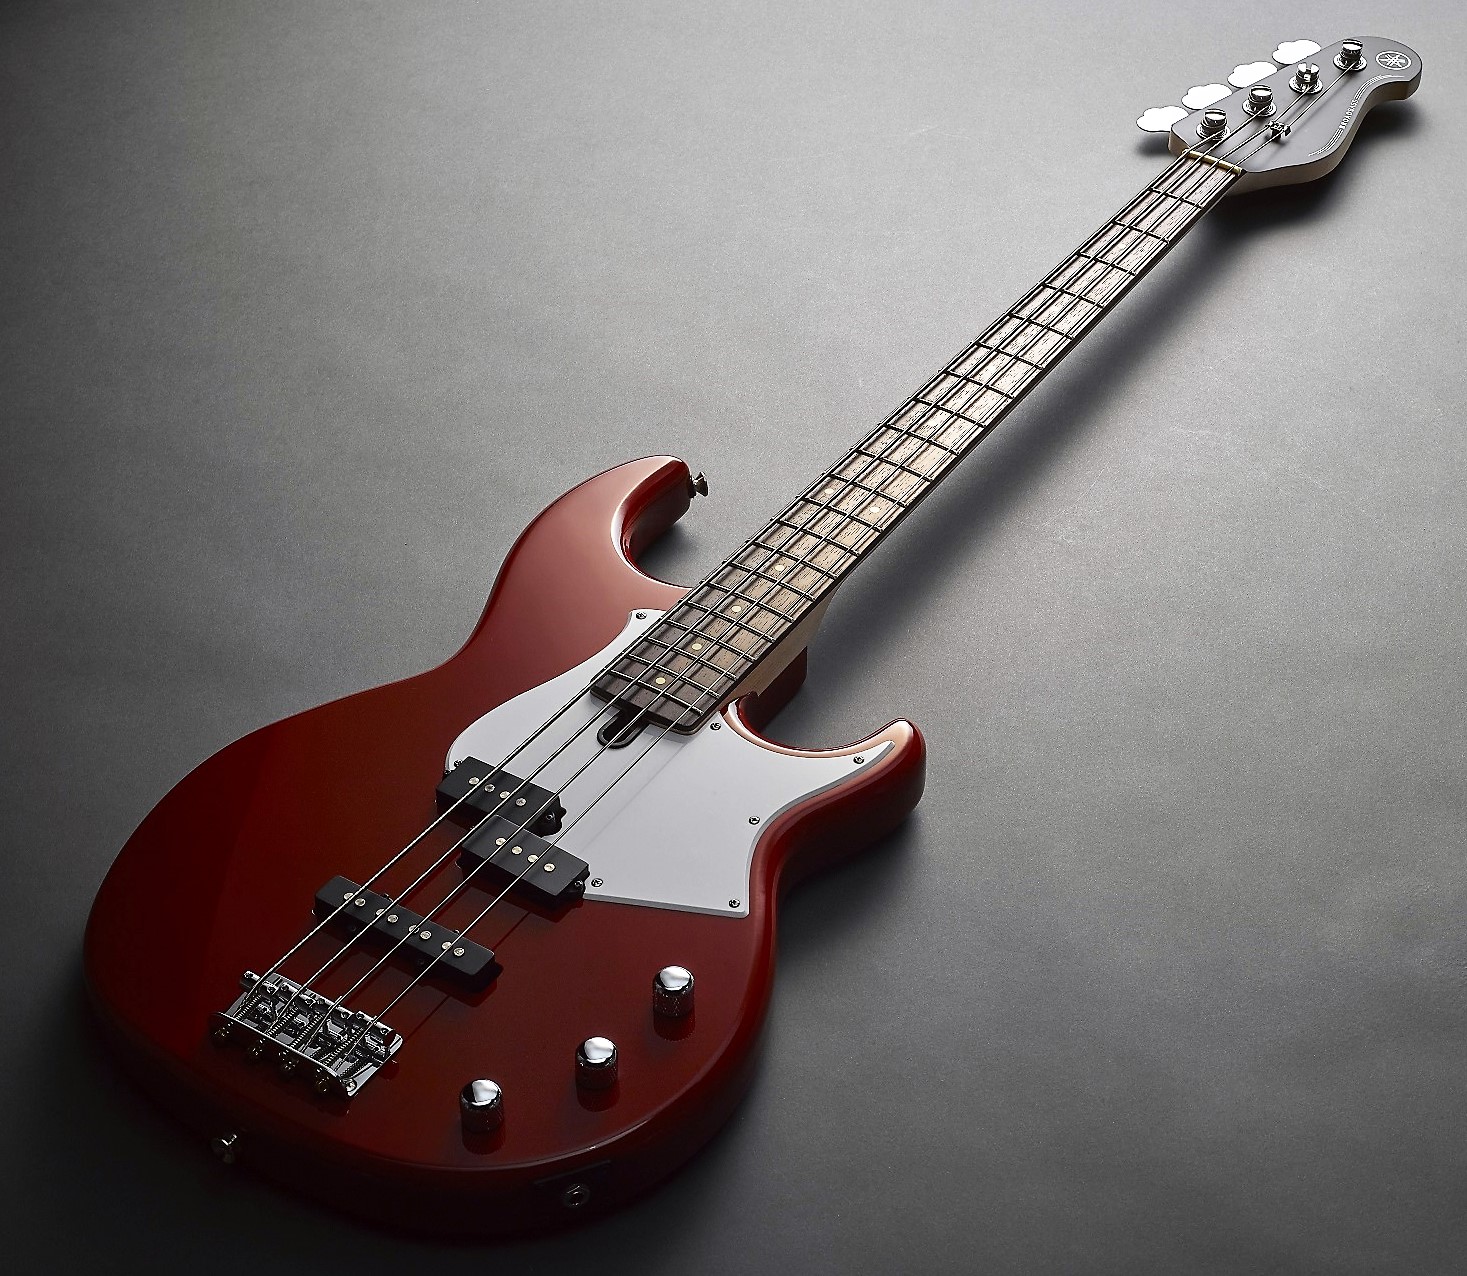 Yamaha 6 String Bass Guitar